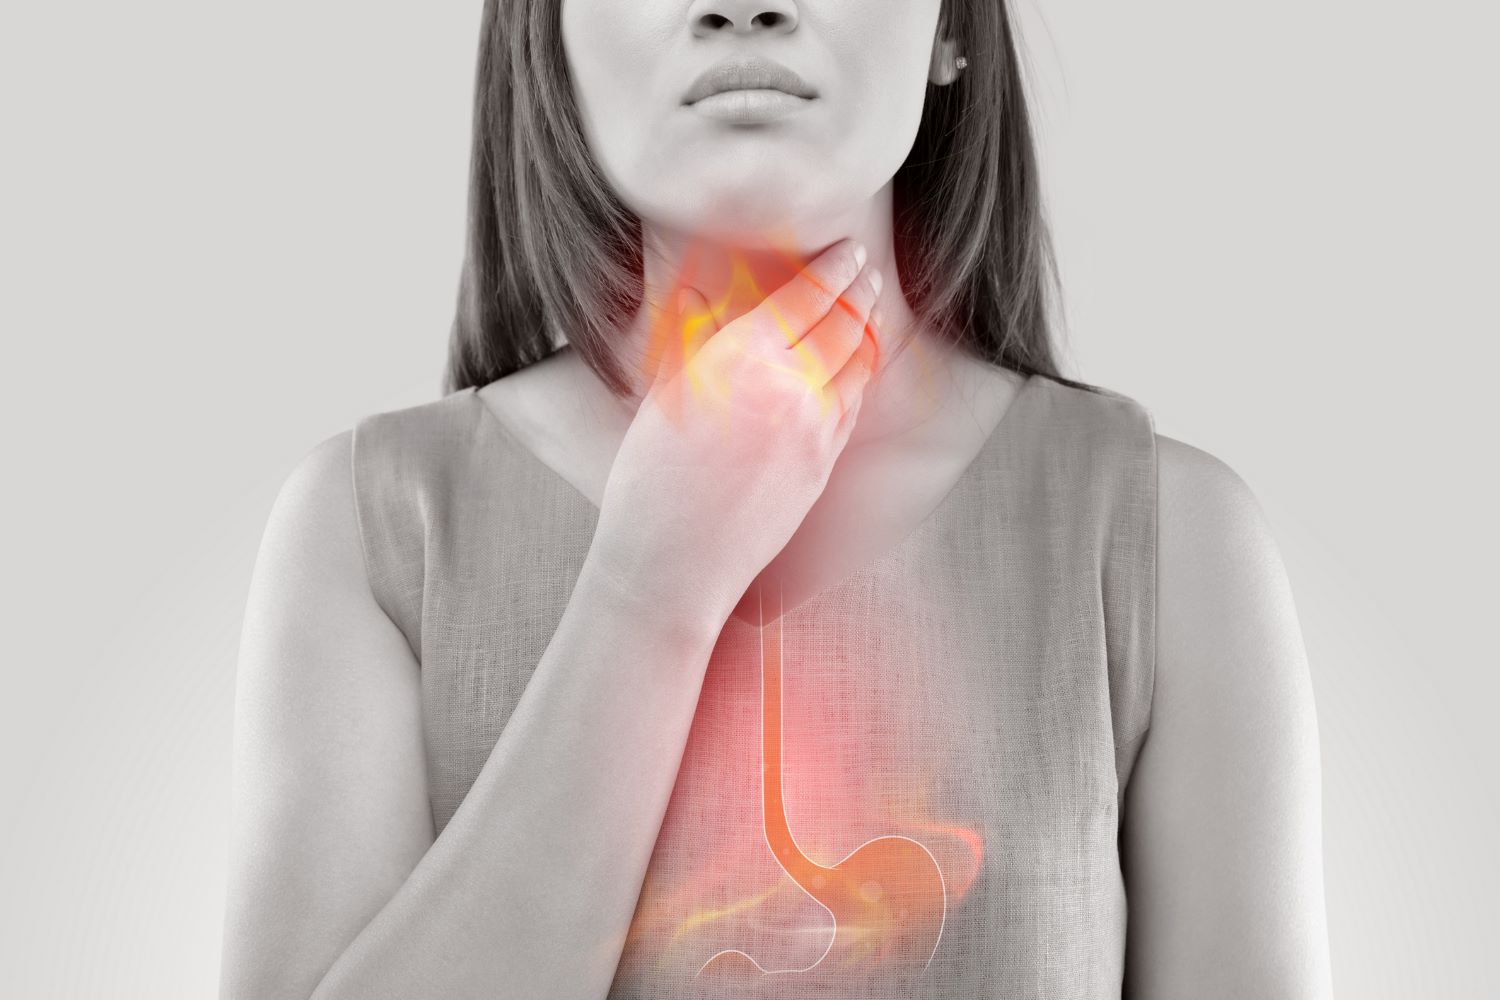 Dexlansoprazole Outperforms Other PPIs in Resolving GERD-Related Heartburn & Reflux Symptoms